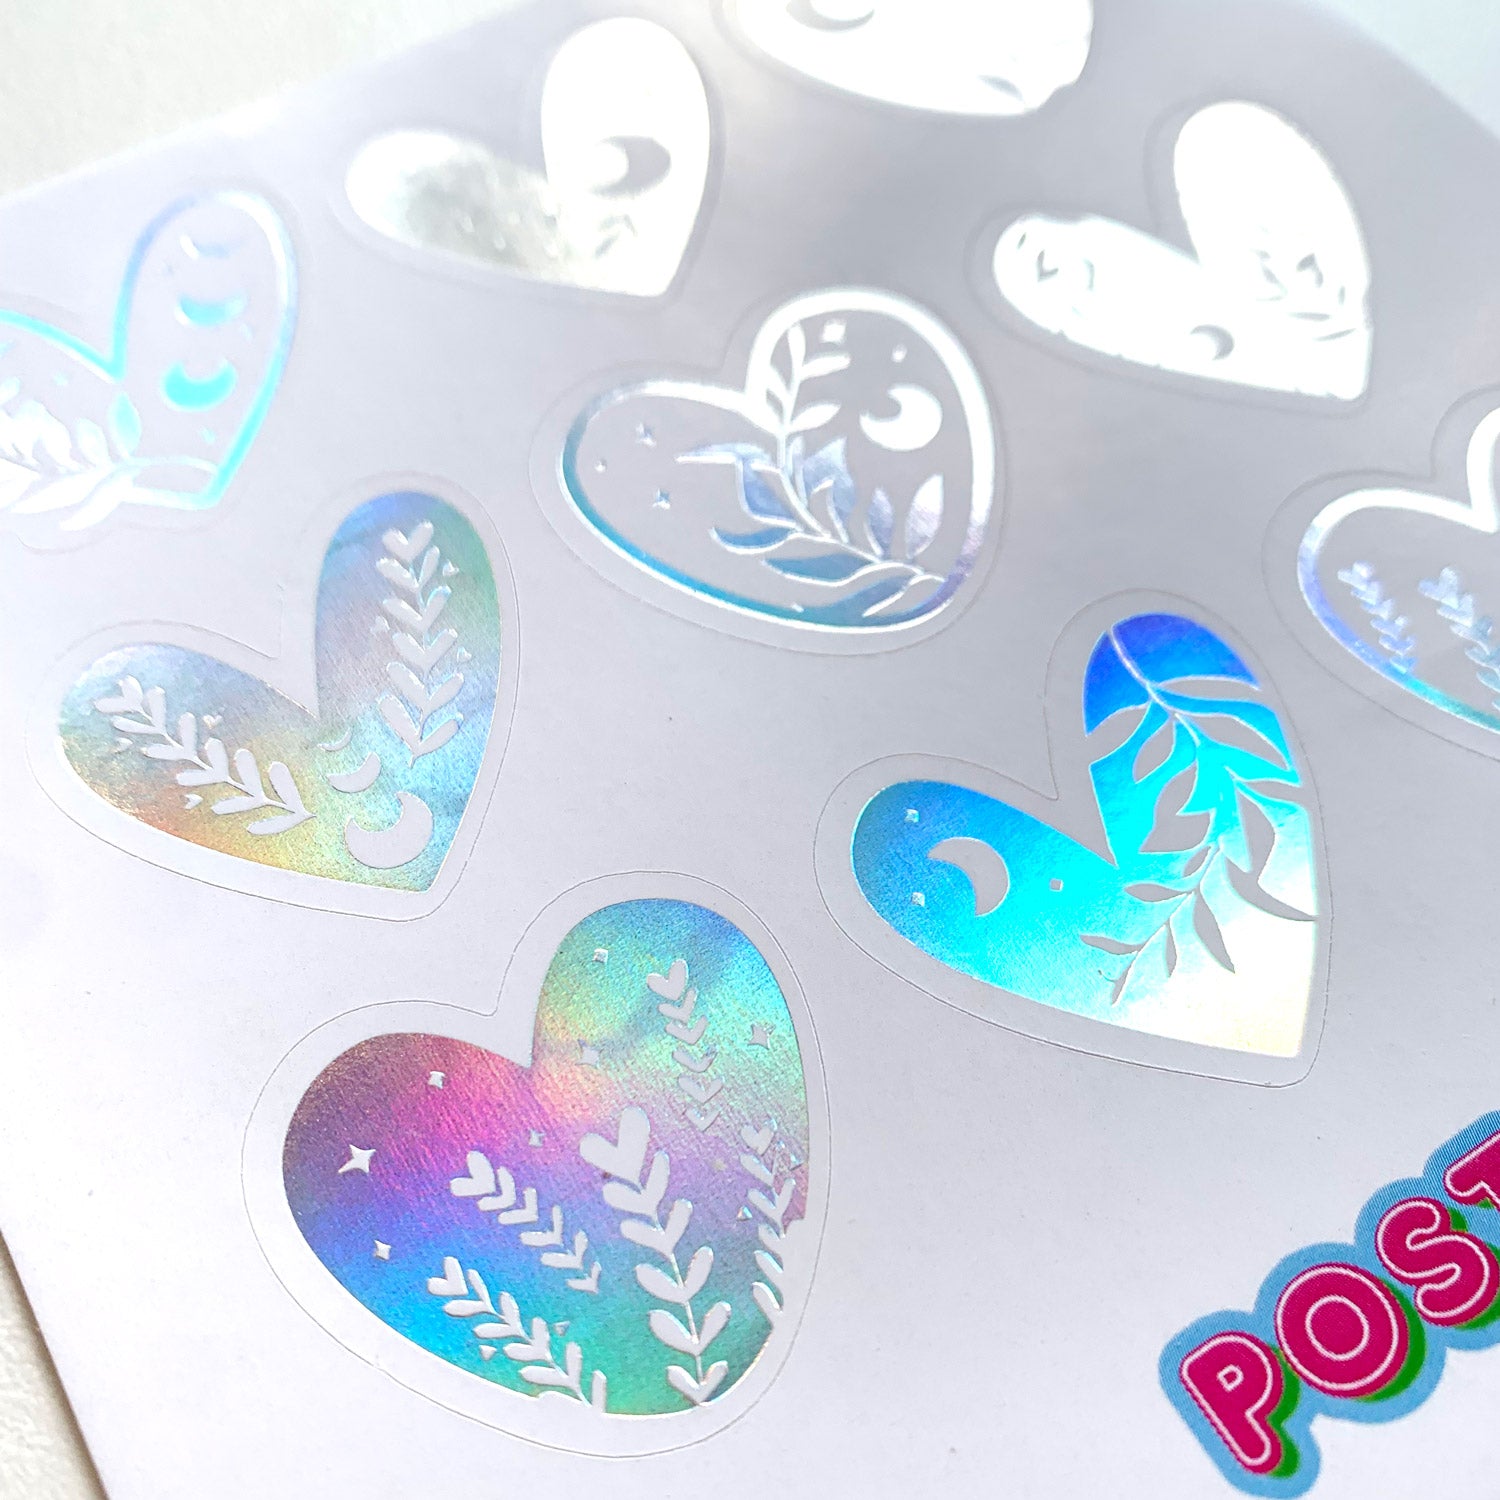 Life Hearts Square Hologram Sticker Sheet